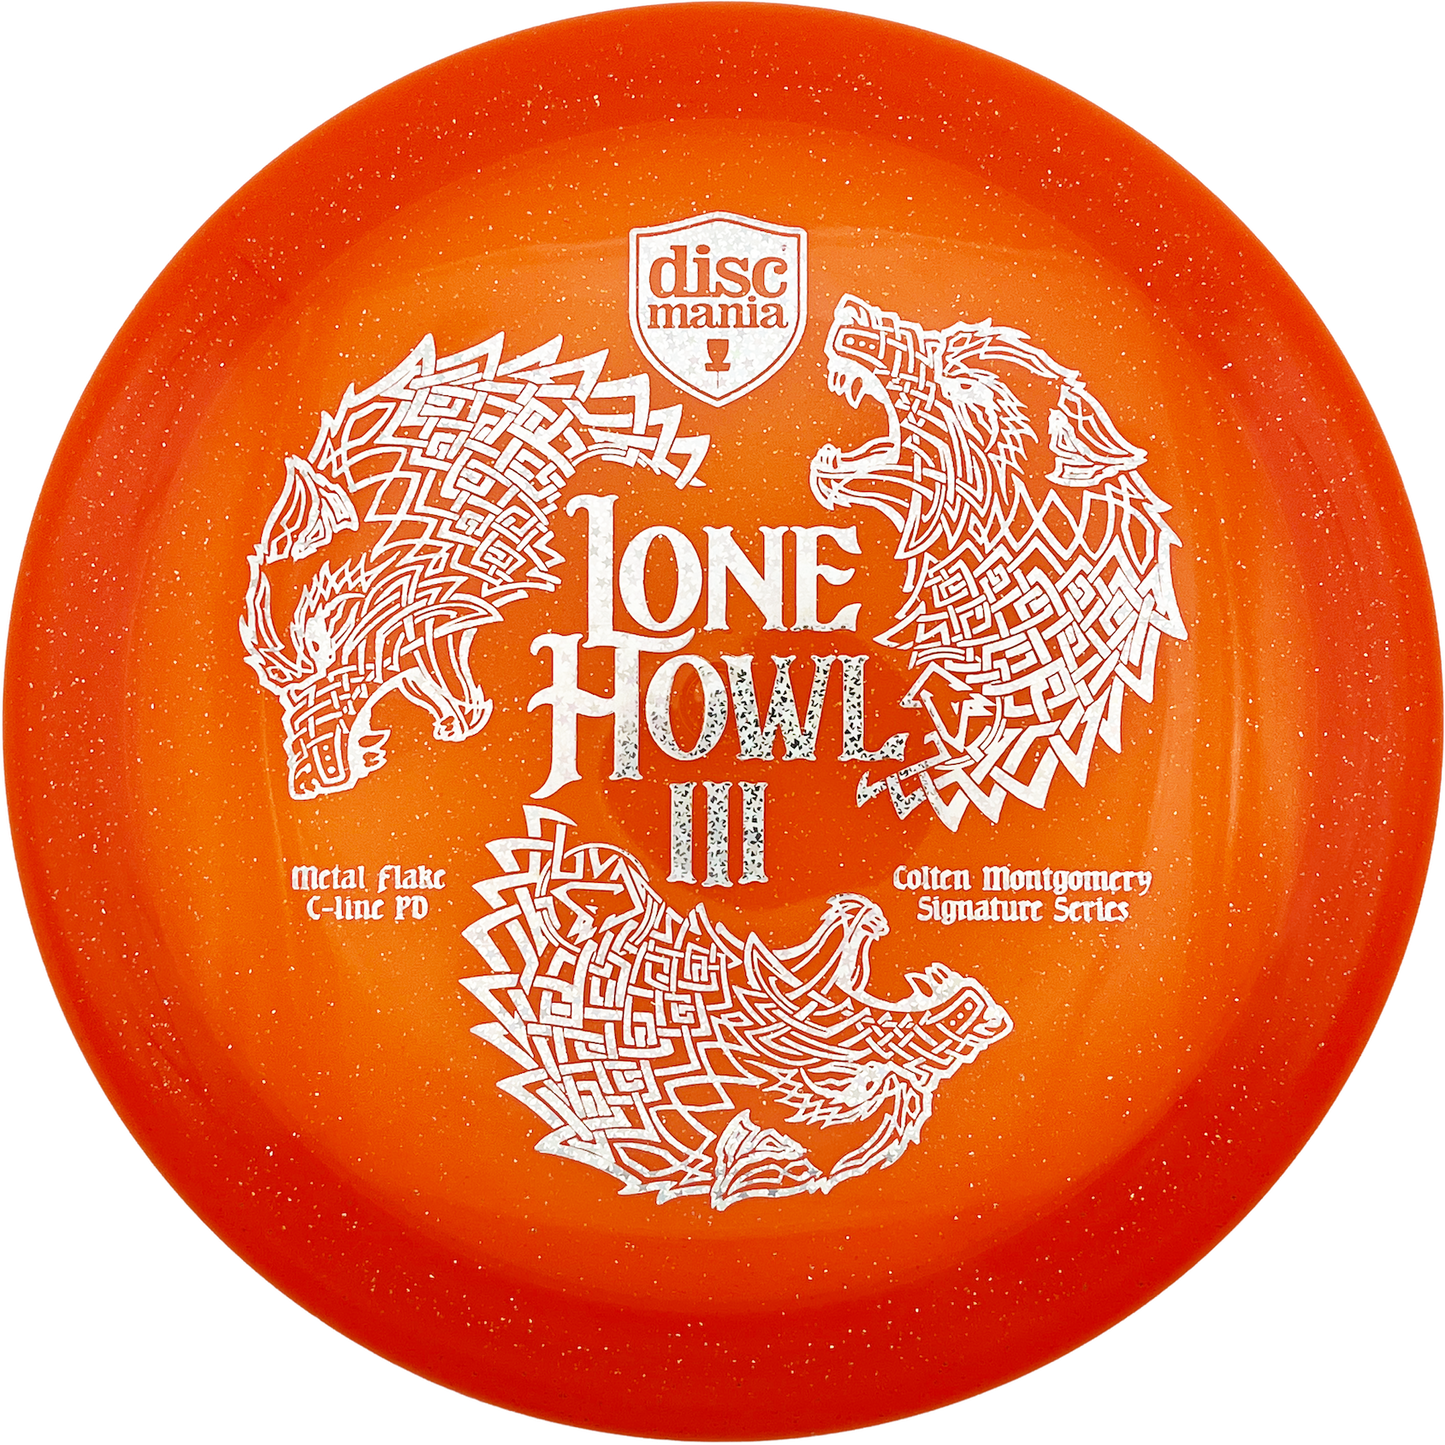 Discmania PD - C Line MF - Lone Howl III - Colten Montgomery Signature Series -  Orange